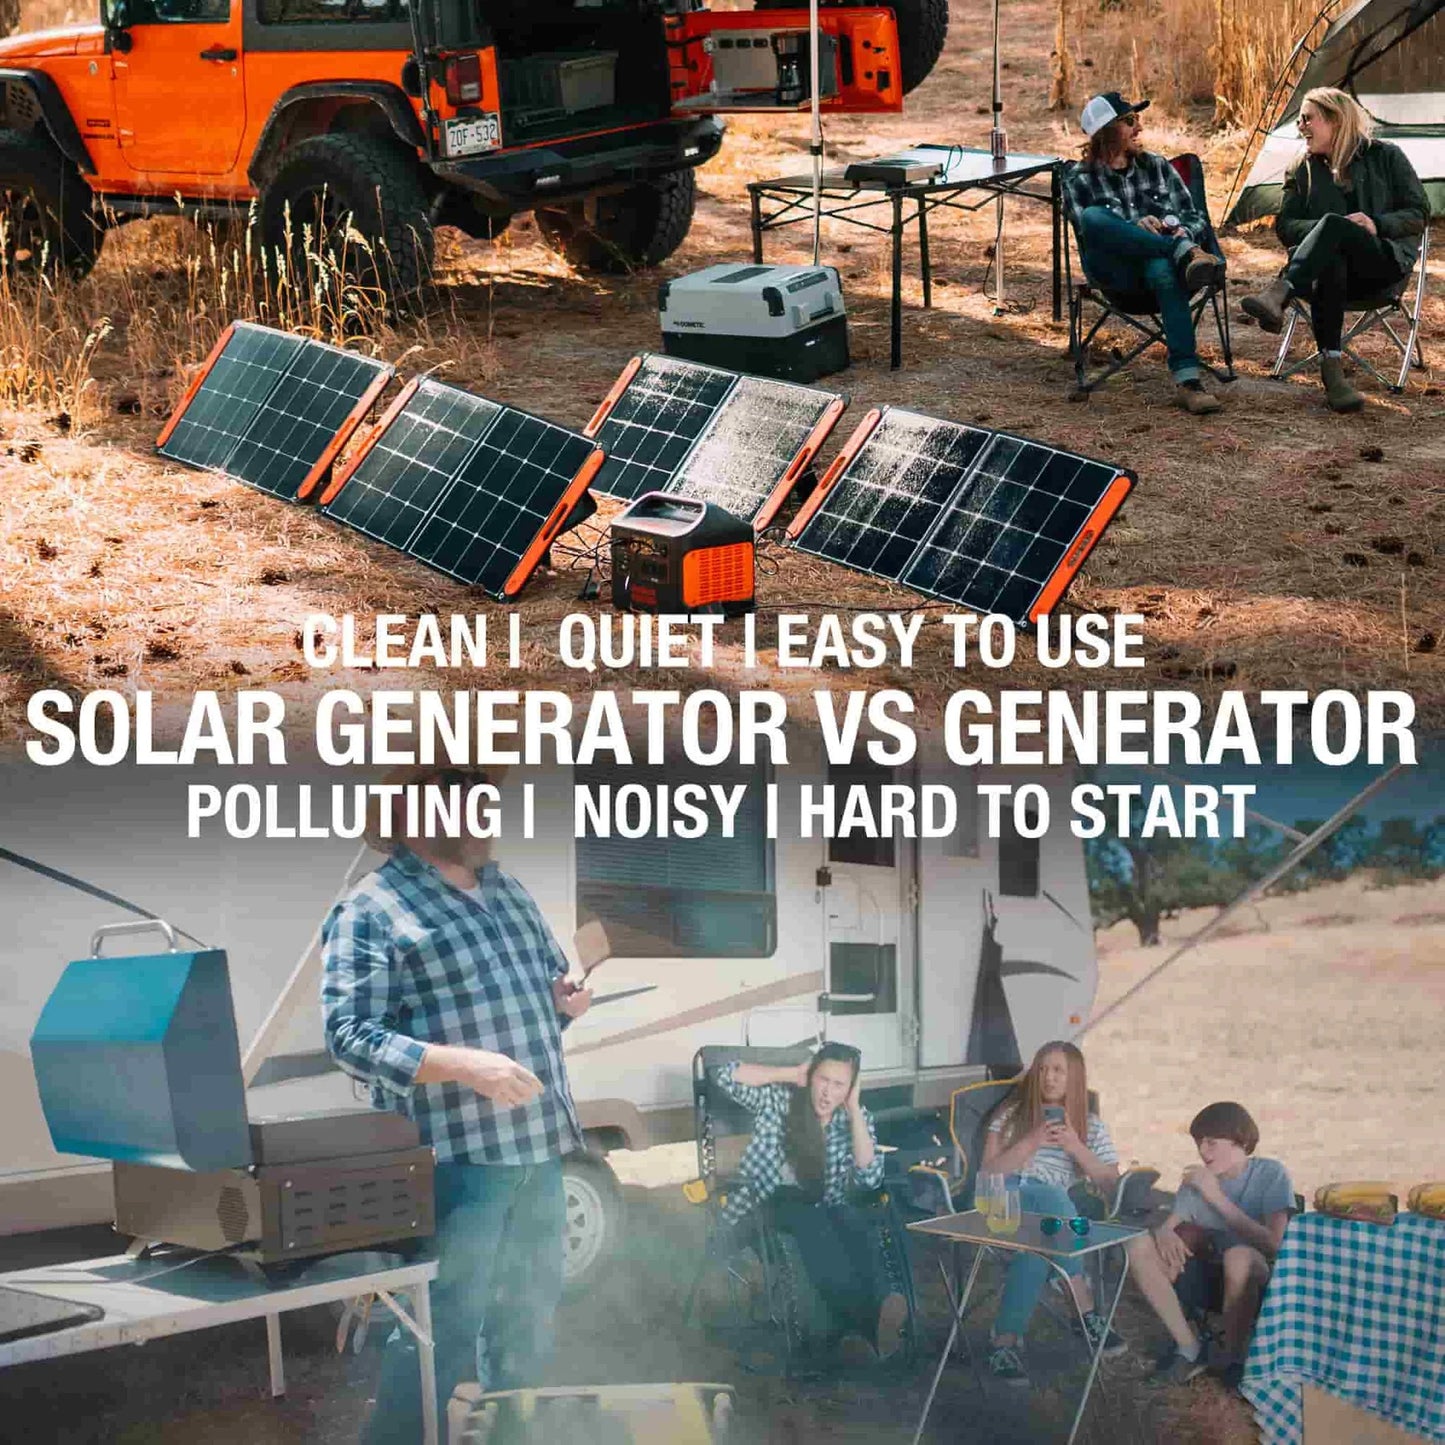 Jackery Solar Generator 1500 - Clean, Quiet, & Easy to Use